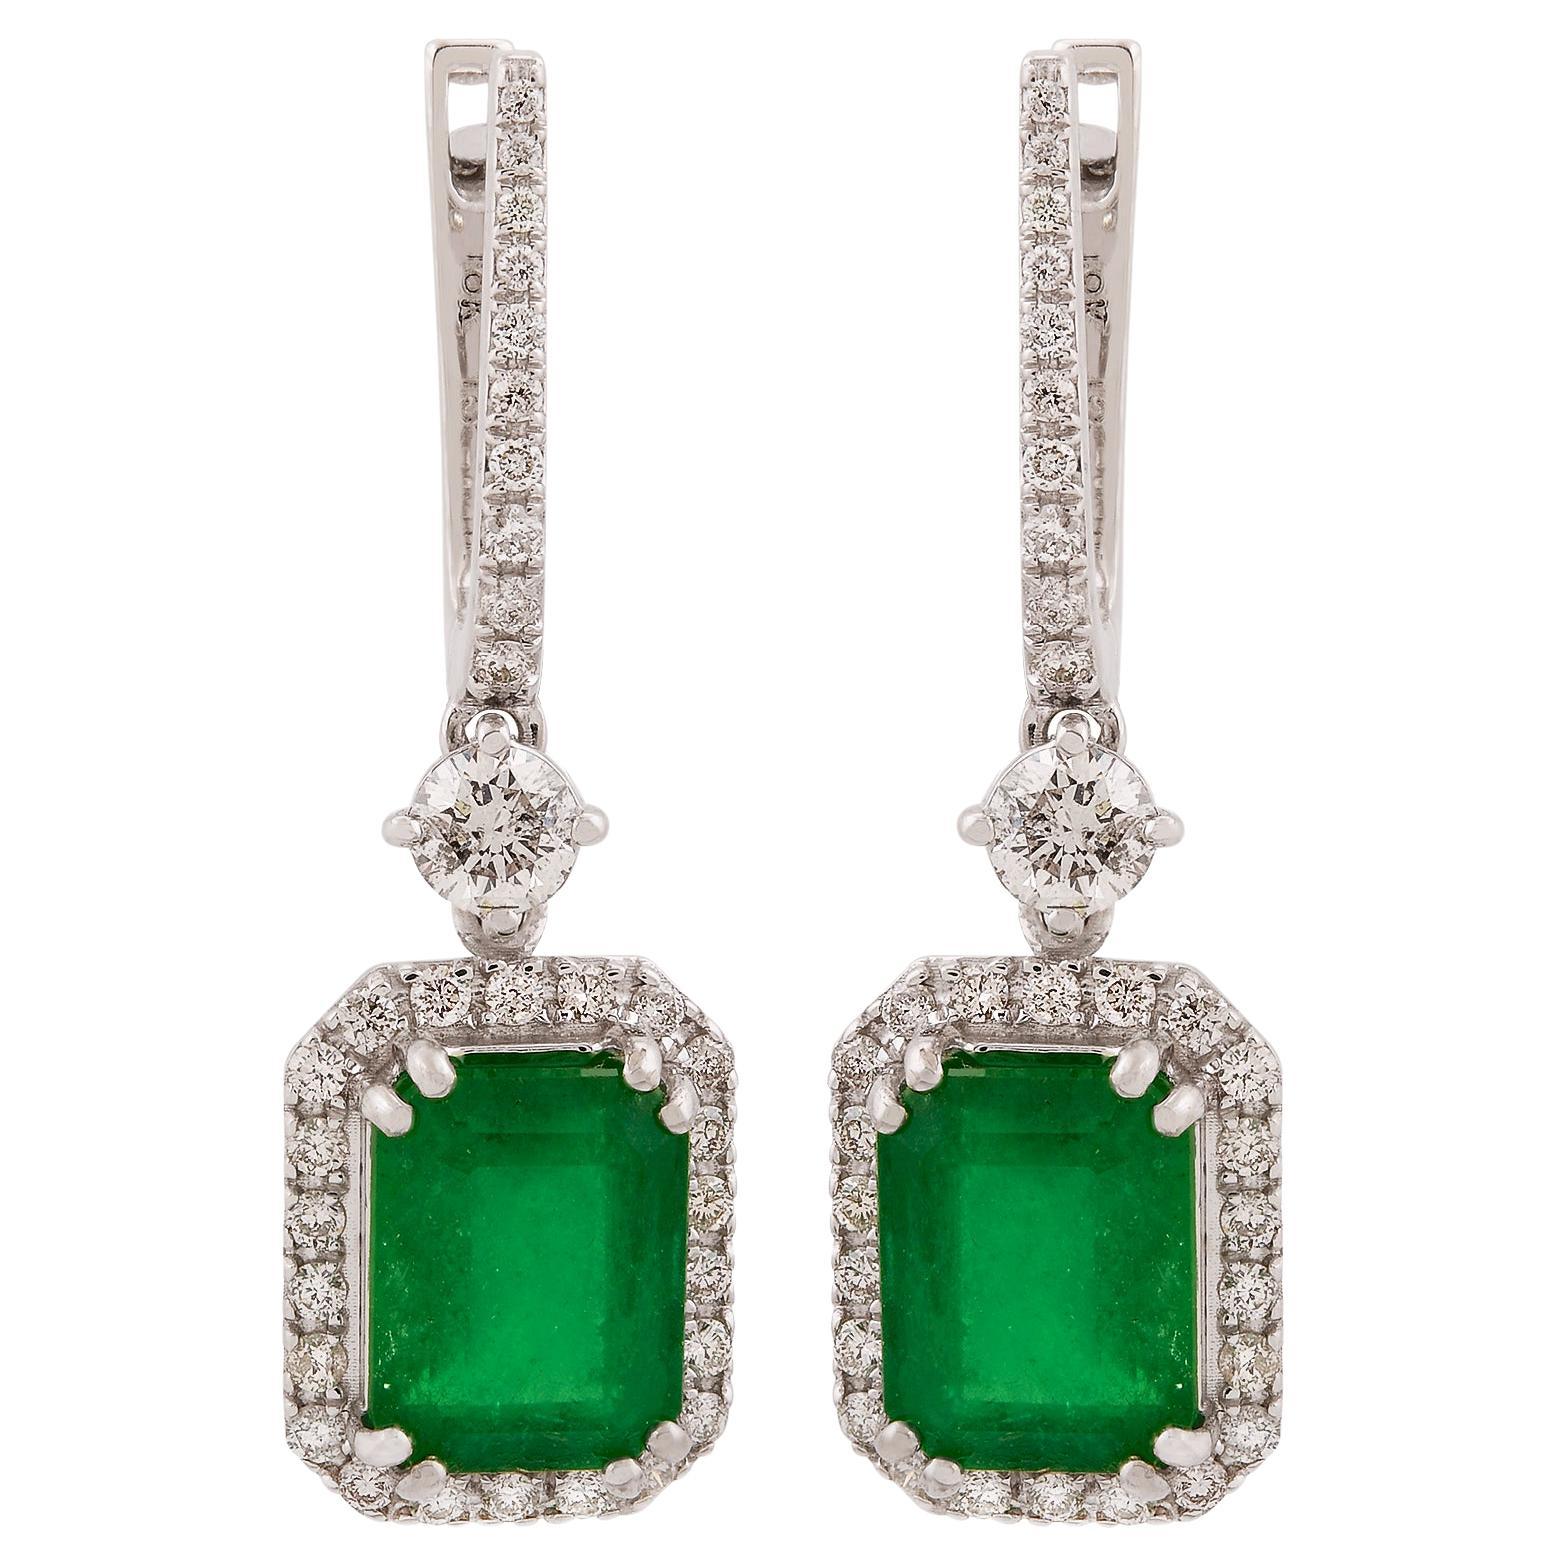 Real Emerald Dangle Earrings 18k White Gold SI Clarity HI Color Diamond Jewelry